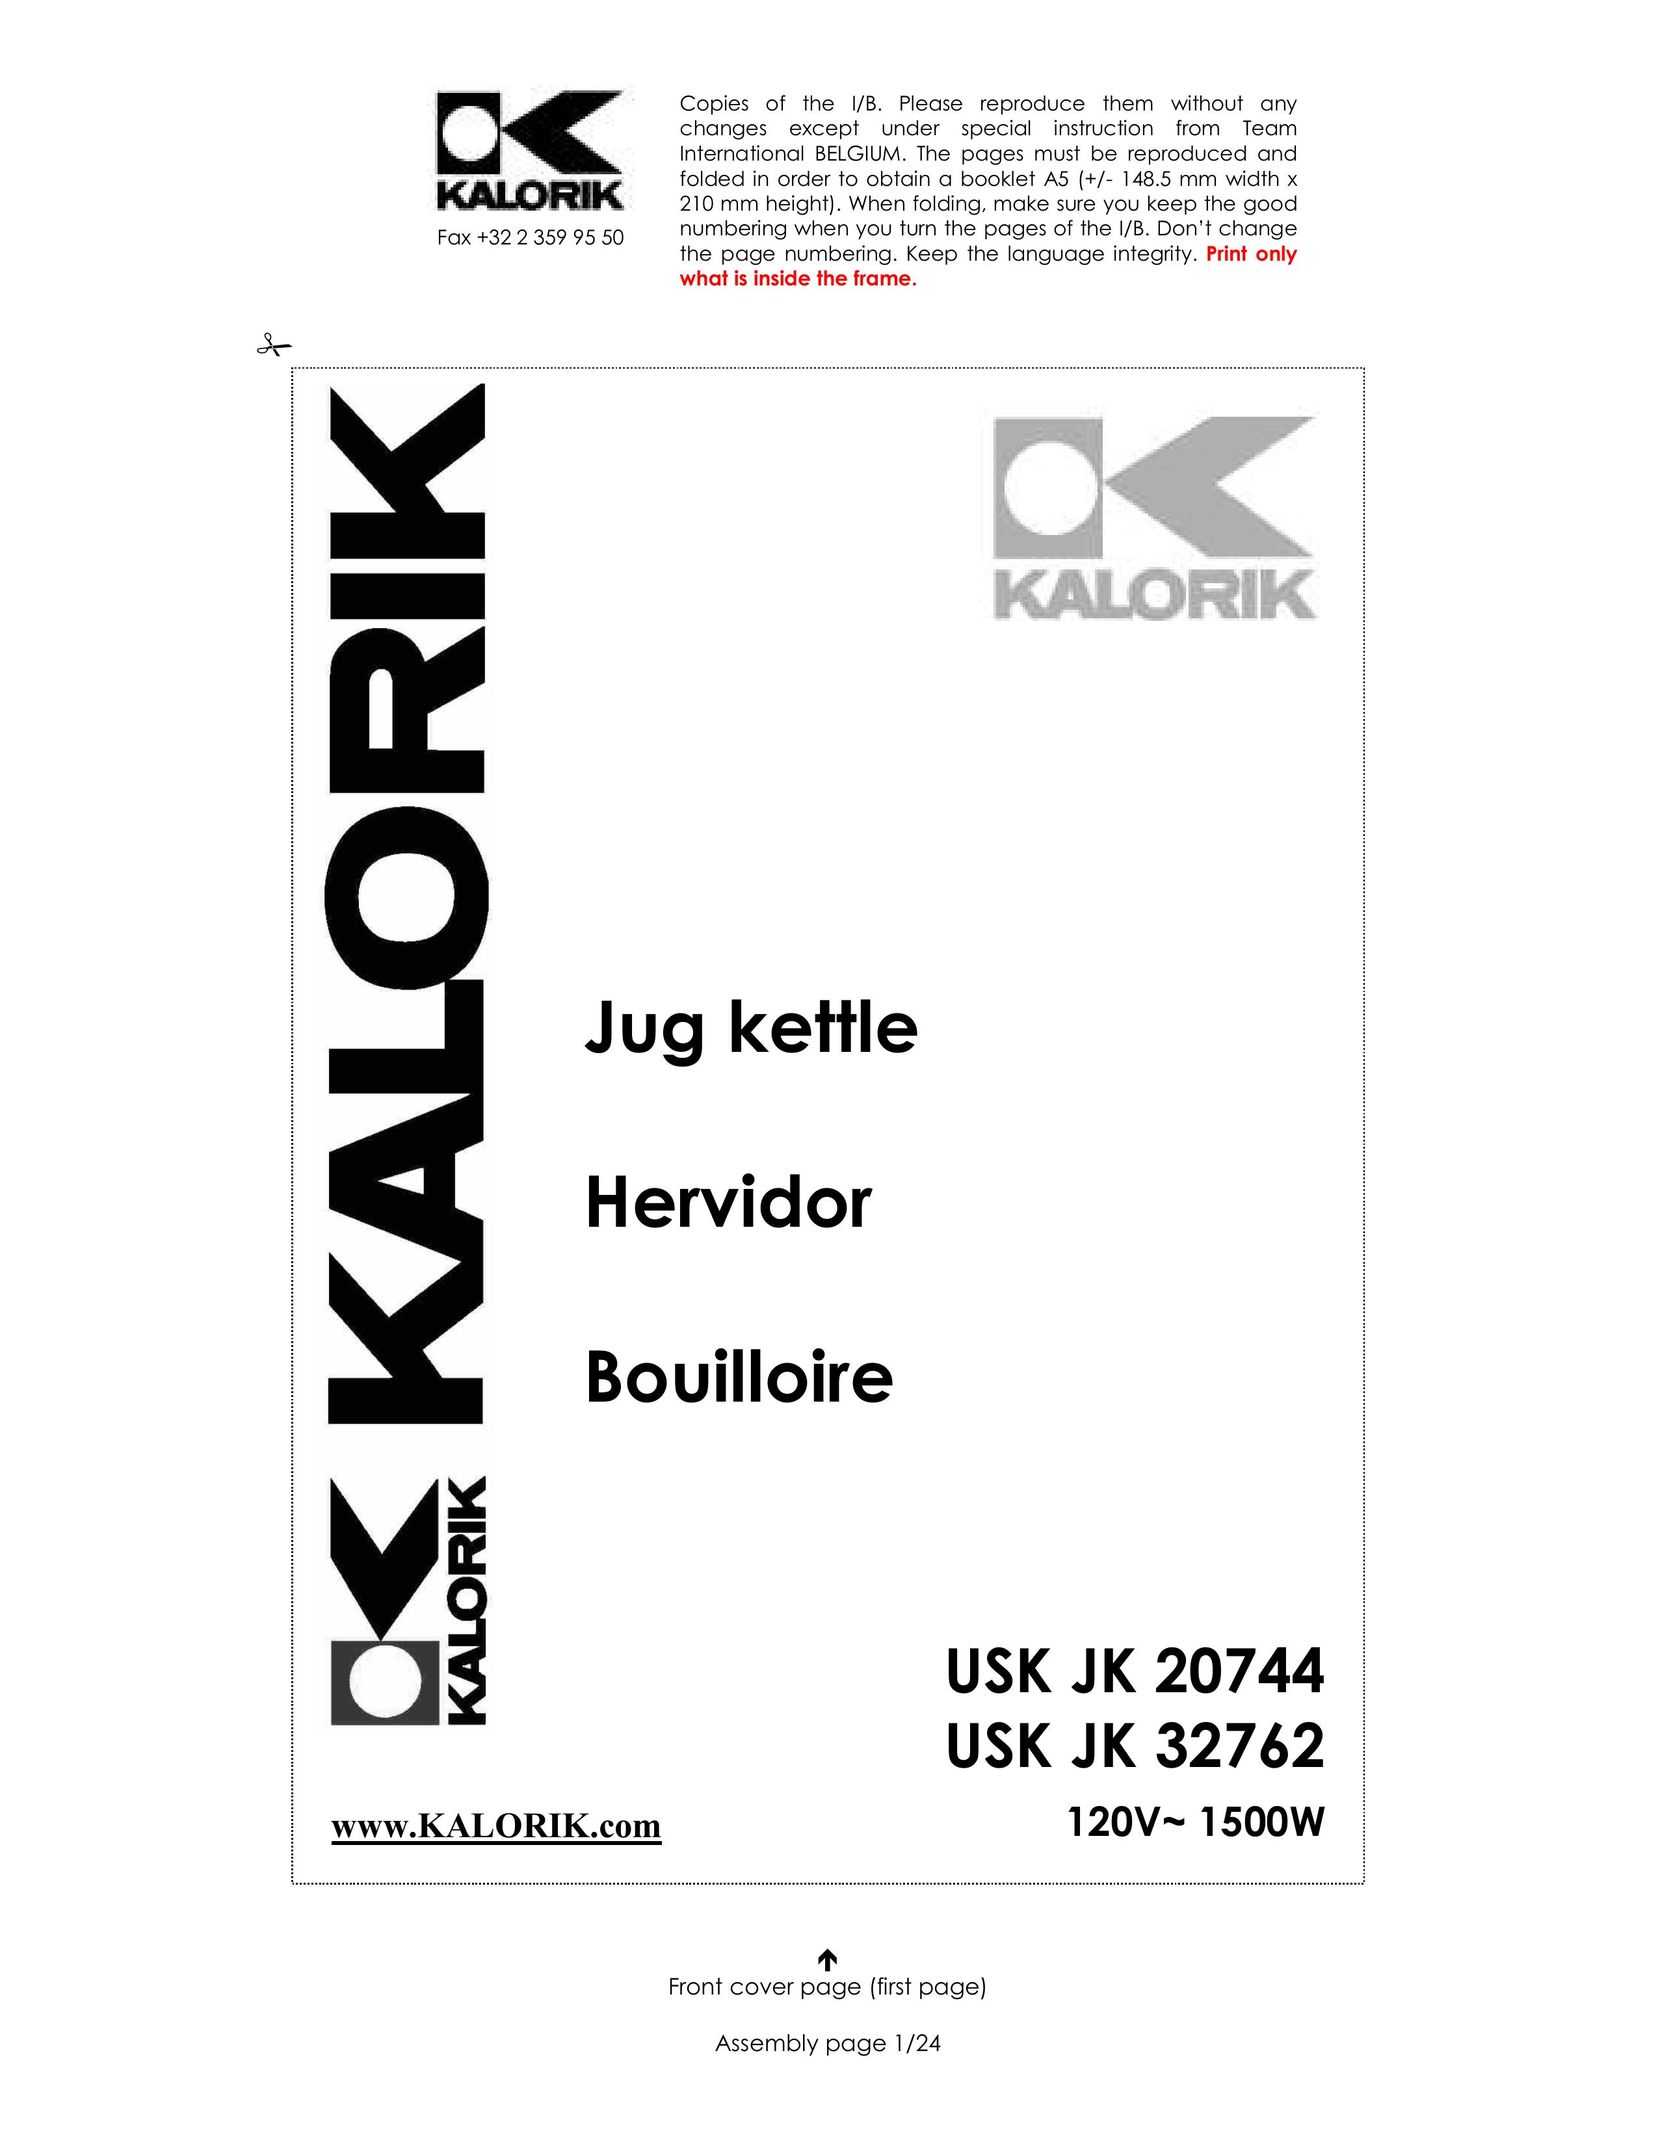 Kalorik USK JK 32762 Hot Beverage Maker User Manual